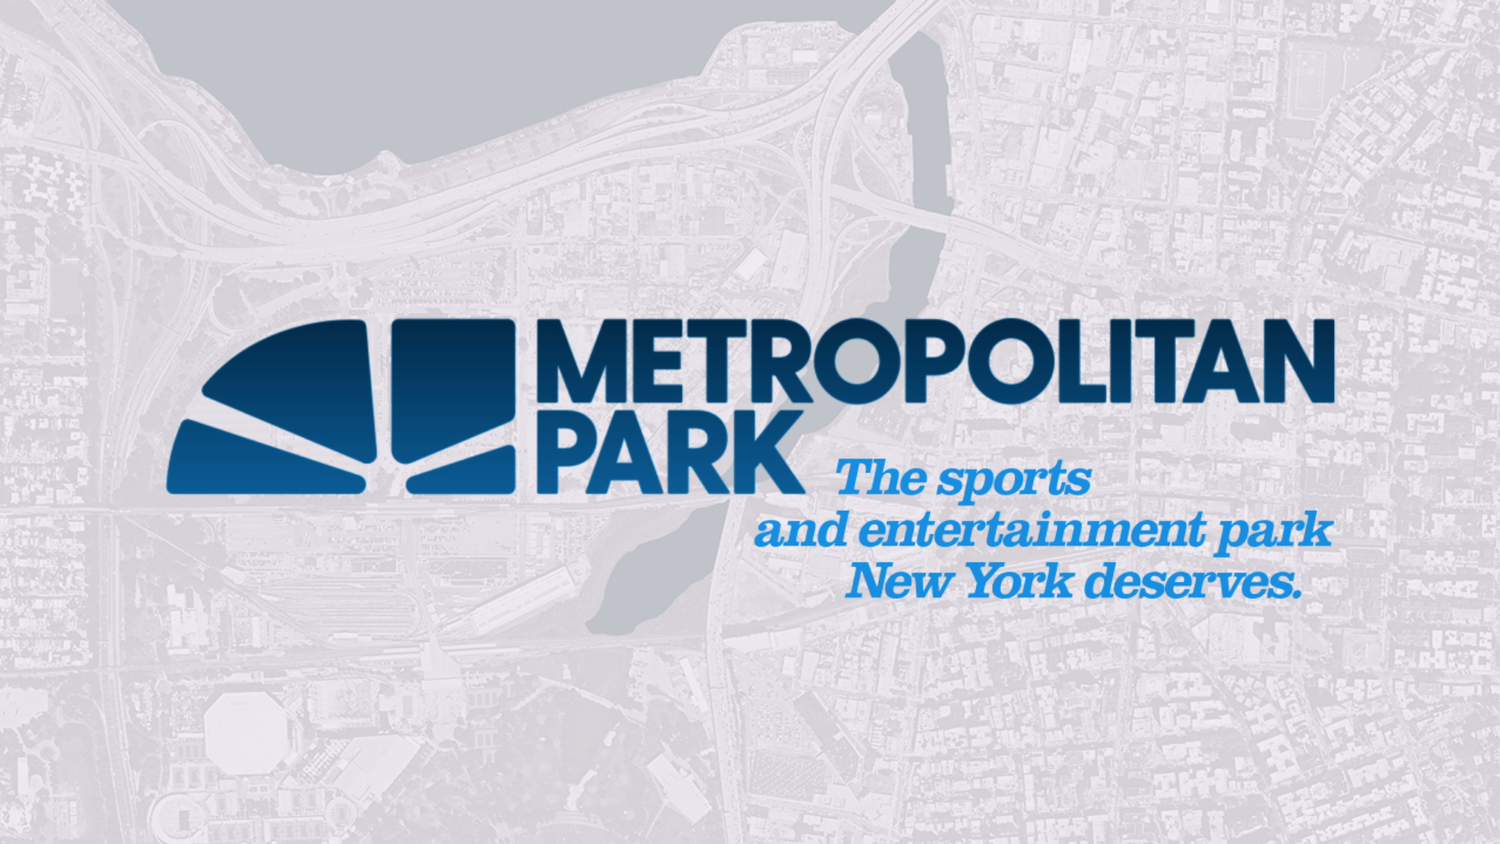 www.metropolitanpark.com